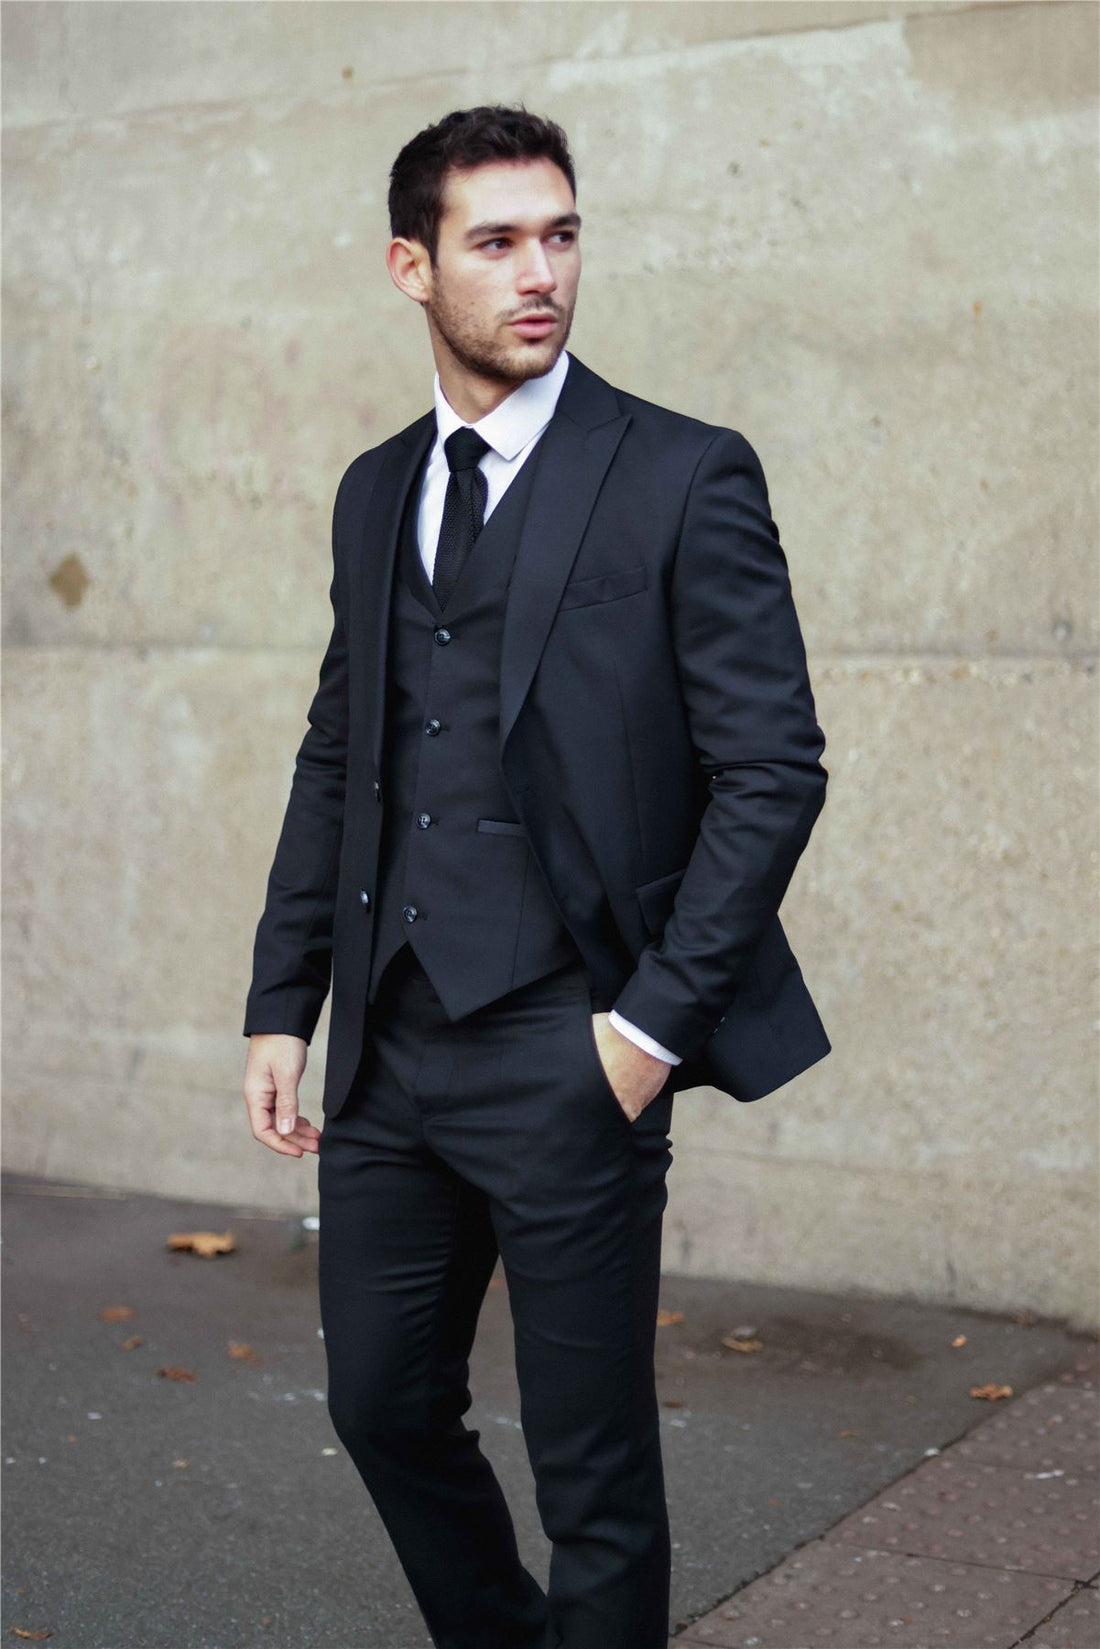 Men's Classic Black Suit 3 Piece Tailored Fit Vintage Office Funeral Security Waiter Wedding